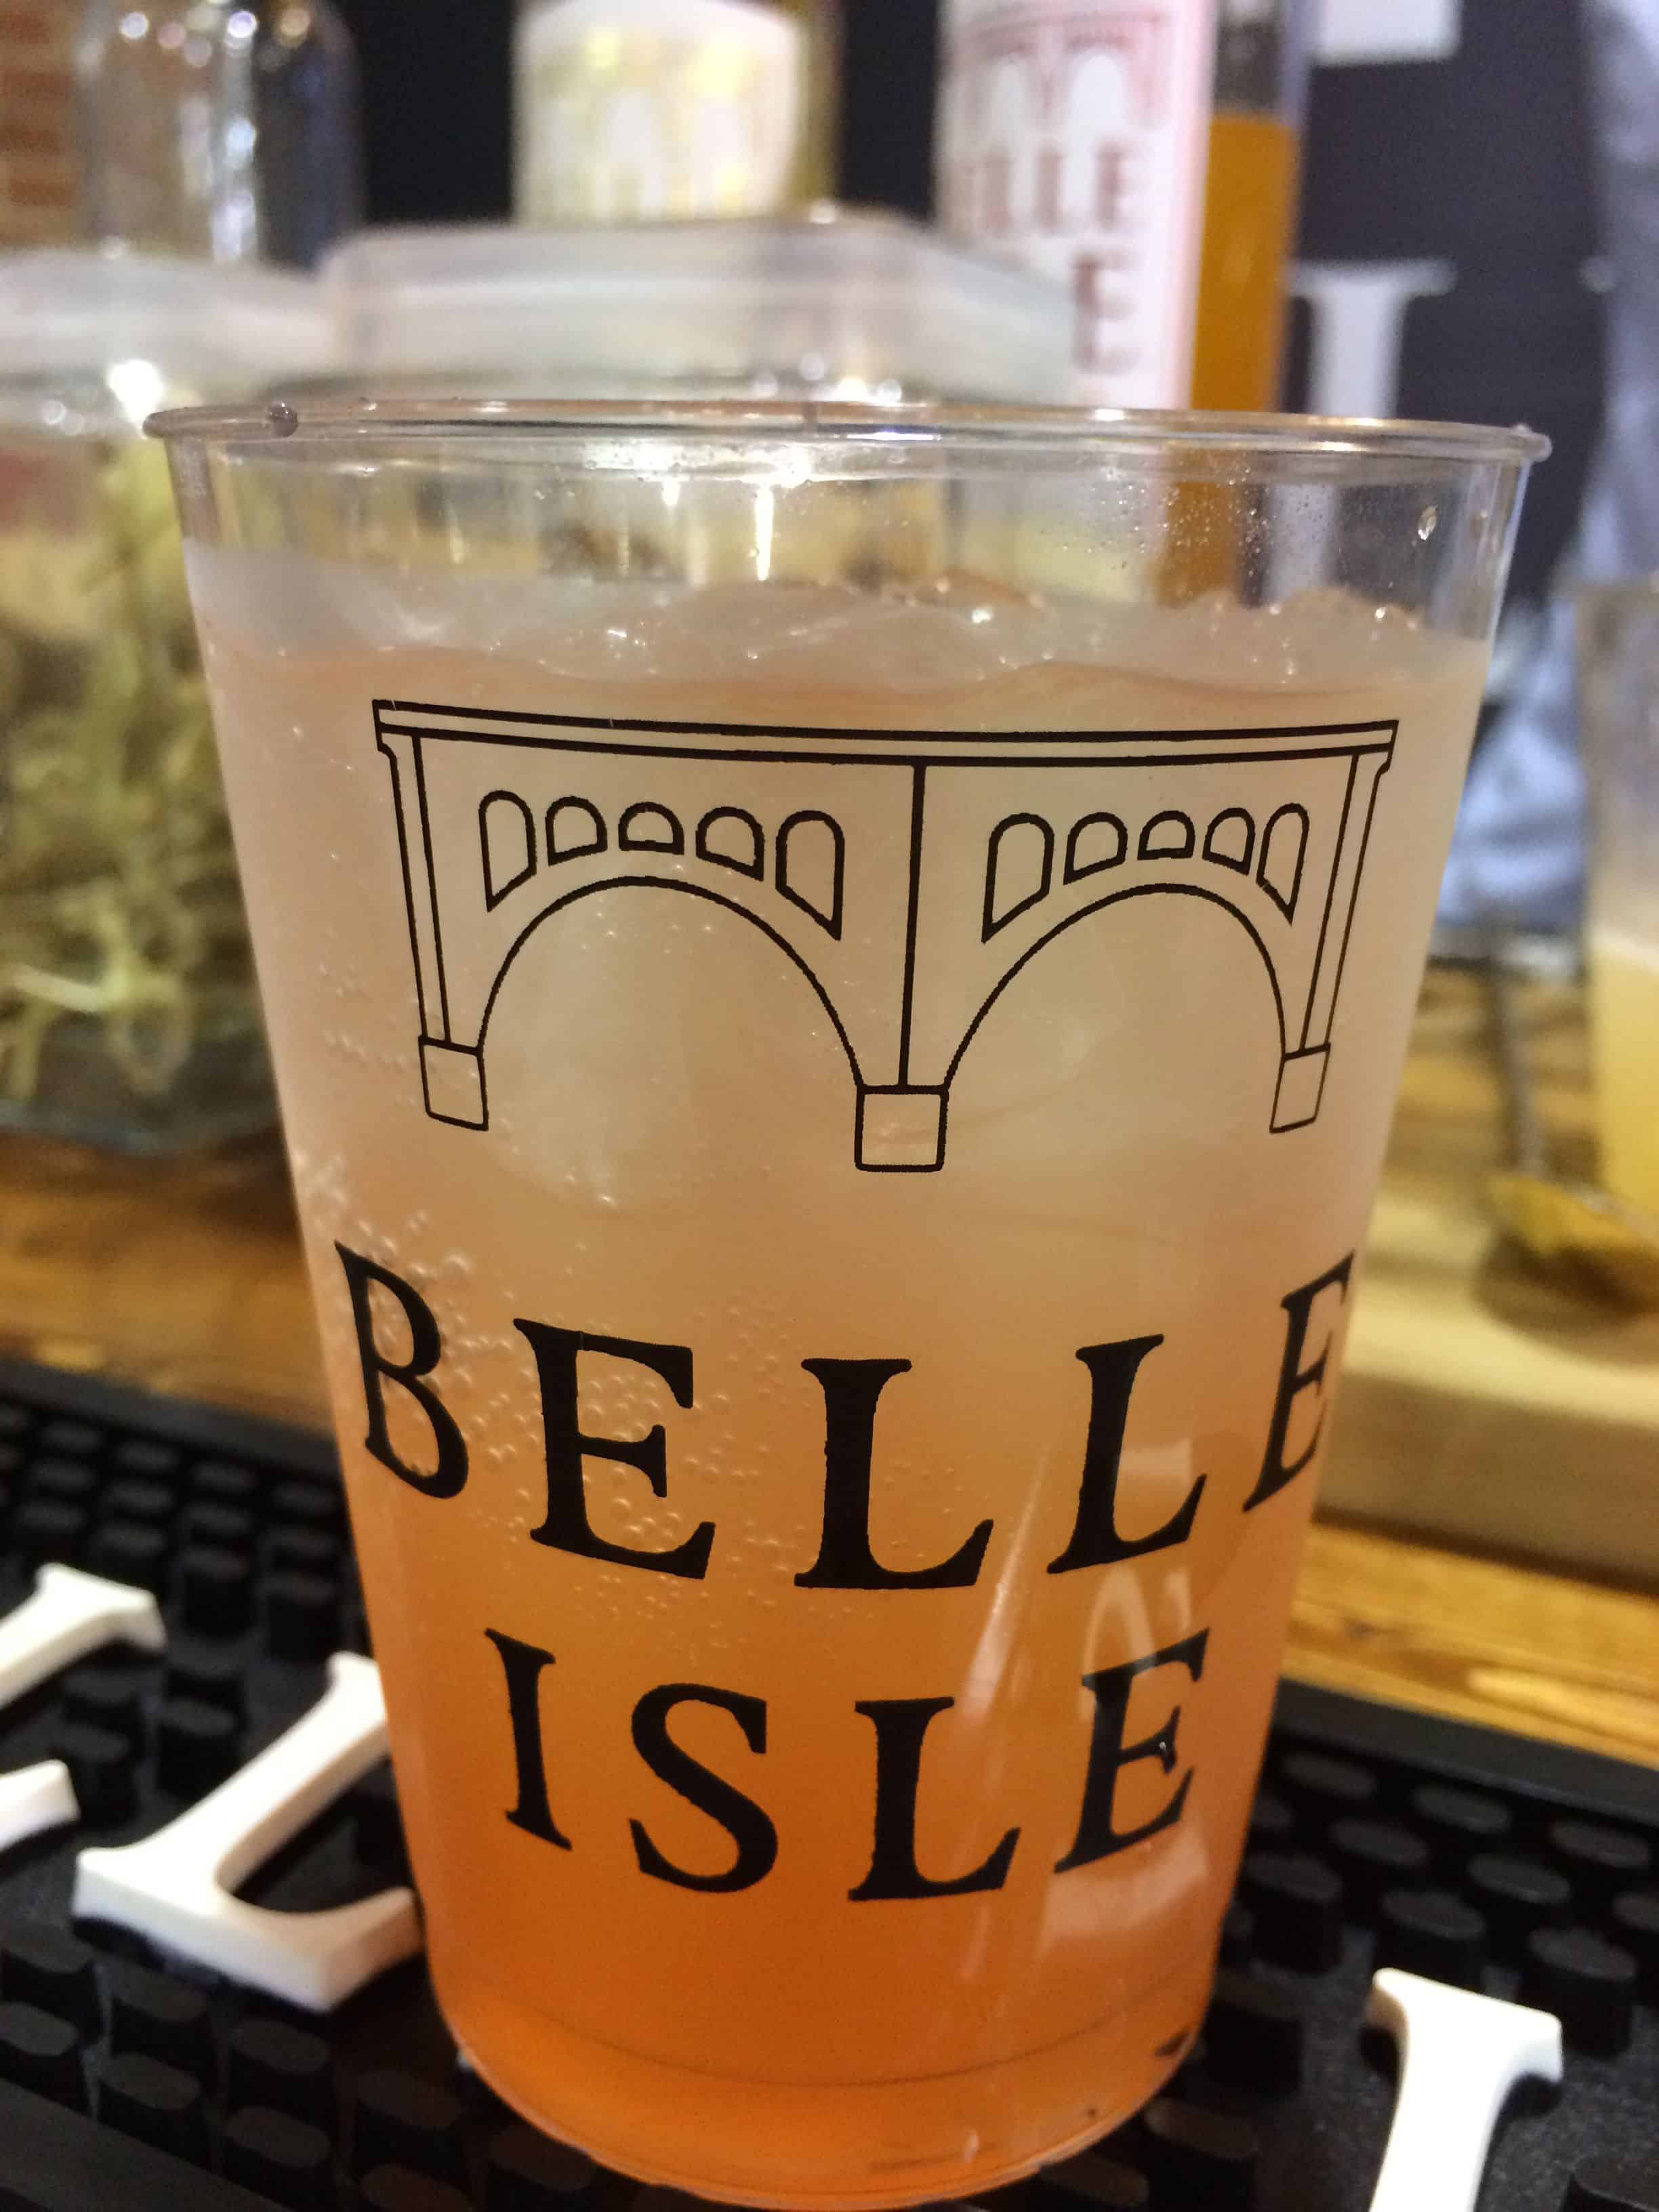 Belle Isle Moonshine